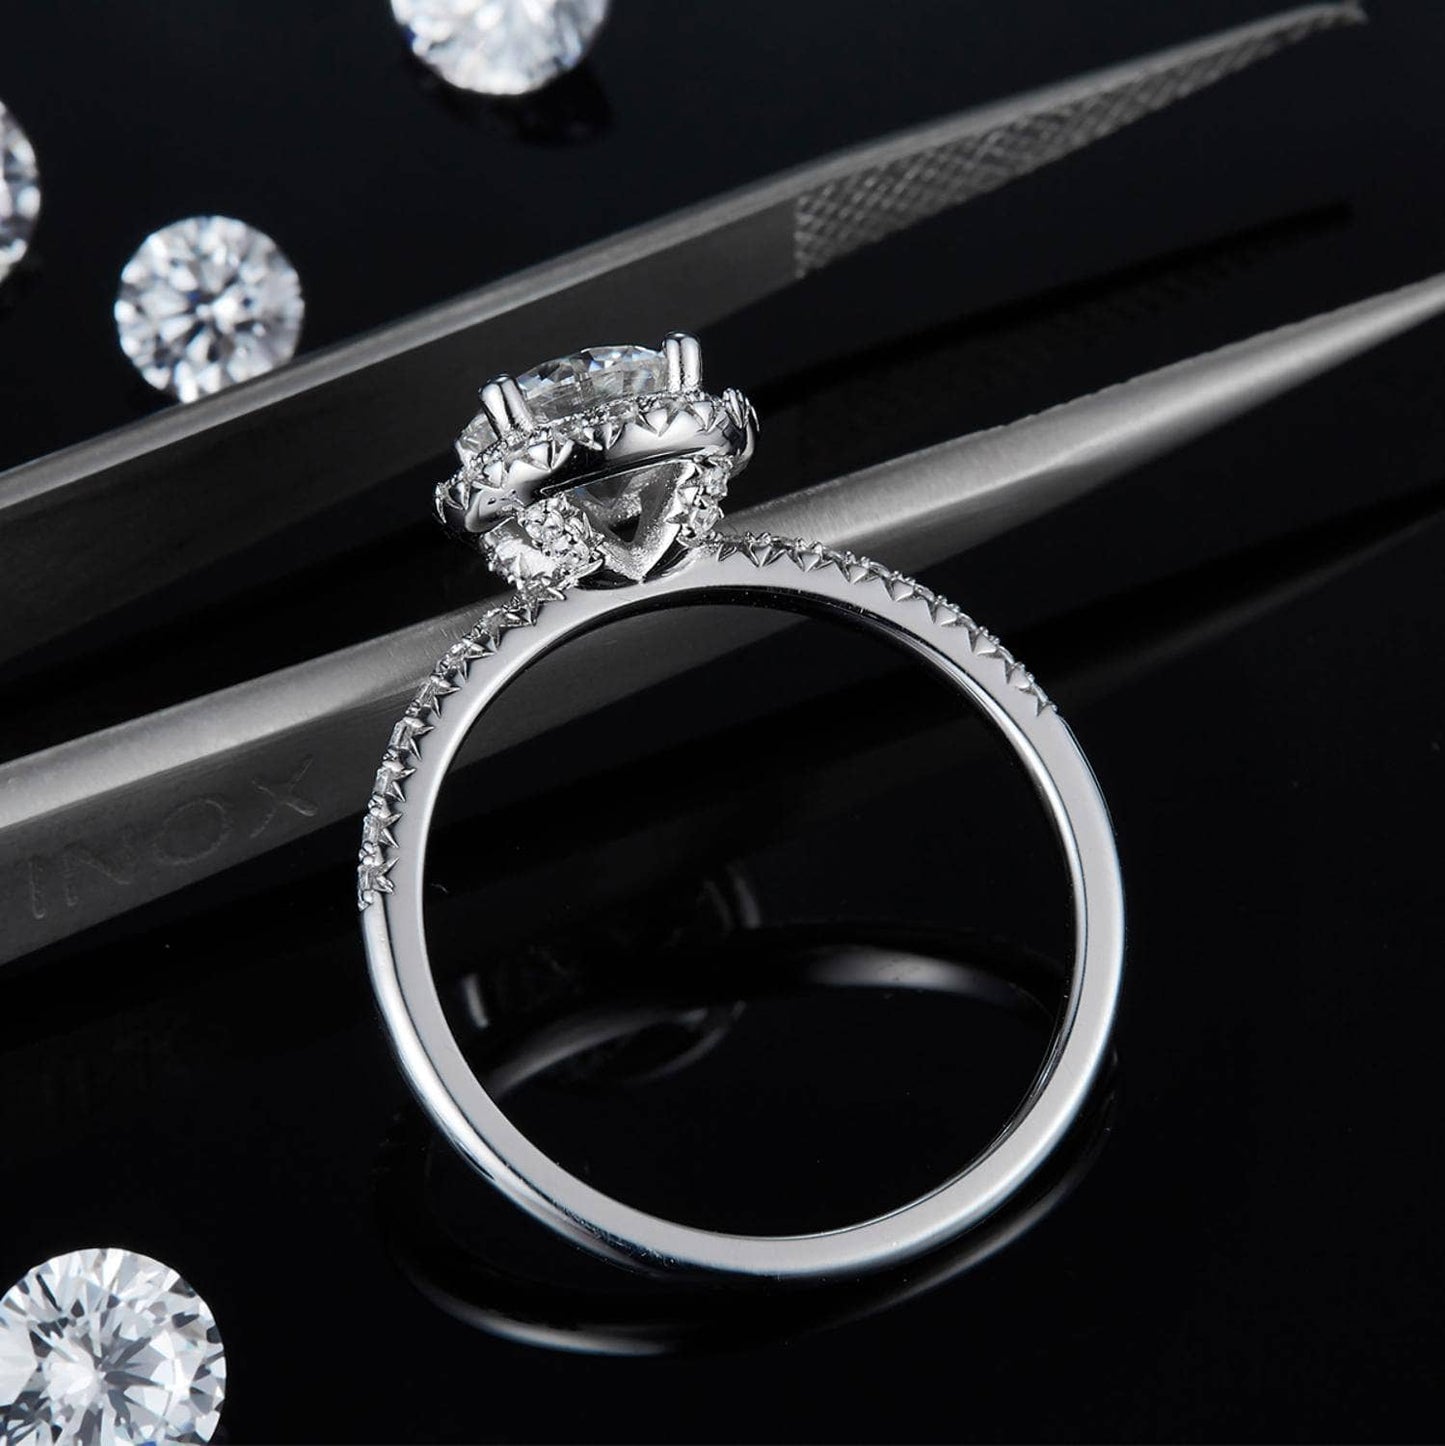 1ct VVS1 Diamond Ring Wedding Engagement Ring-Black Diamonds New York